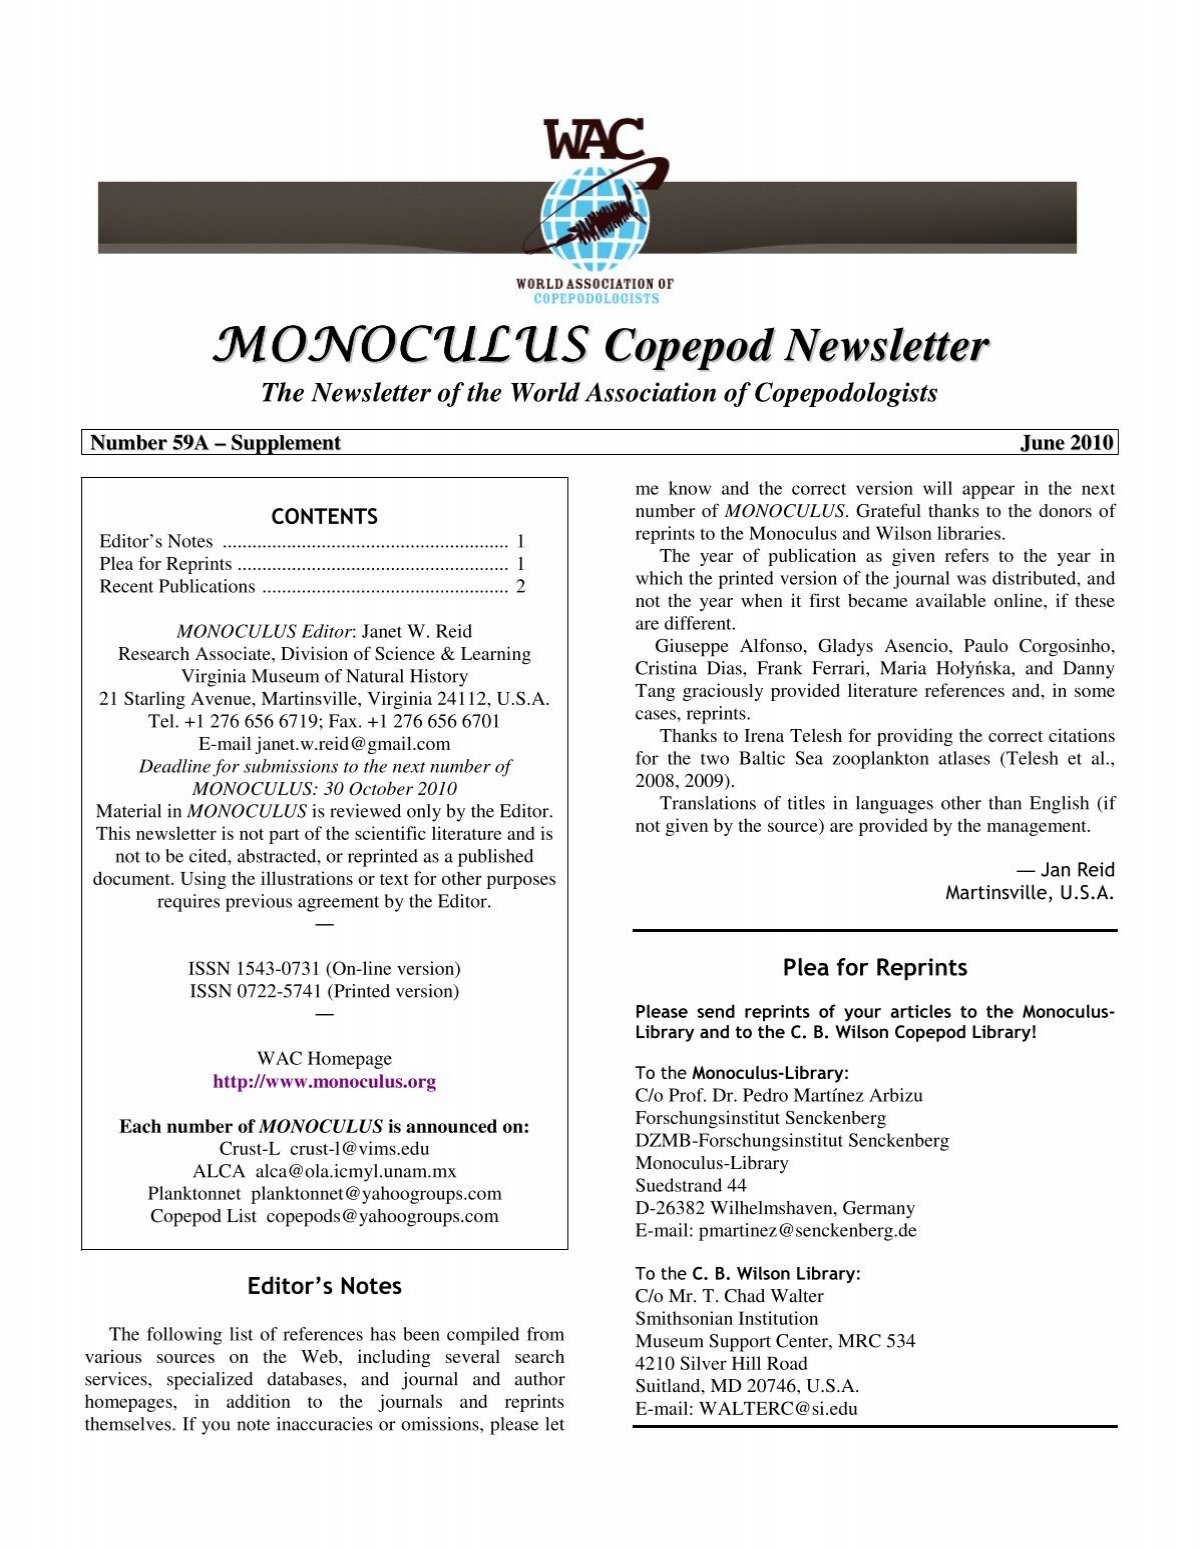 MONOCULUS Copepod Newsletter - World Association of